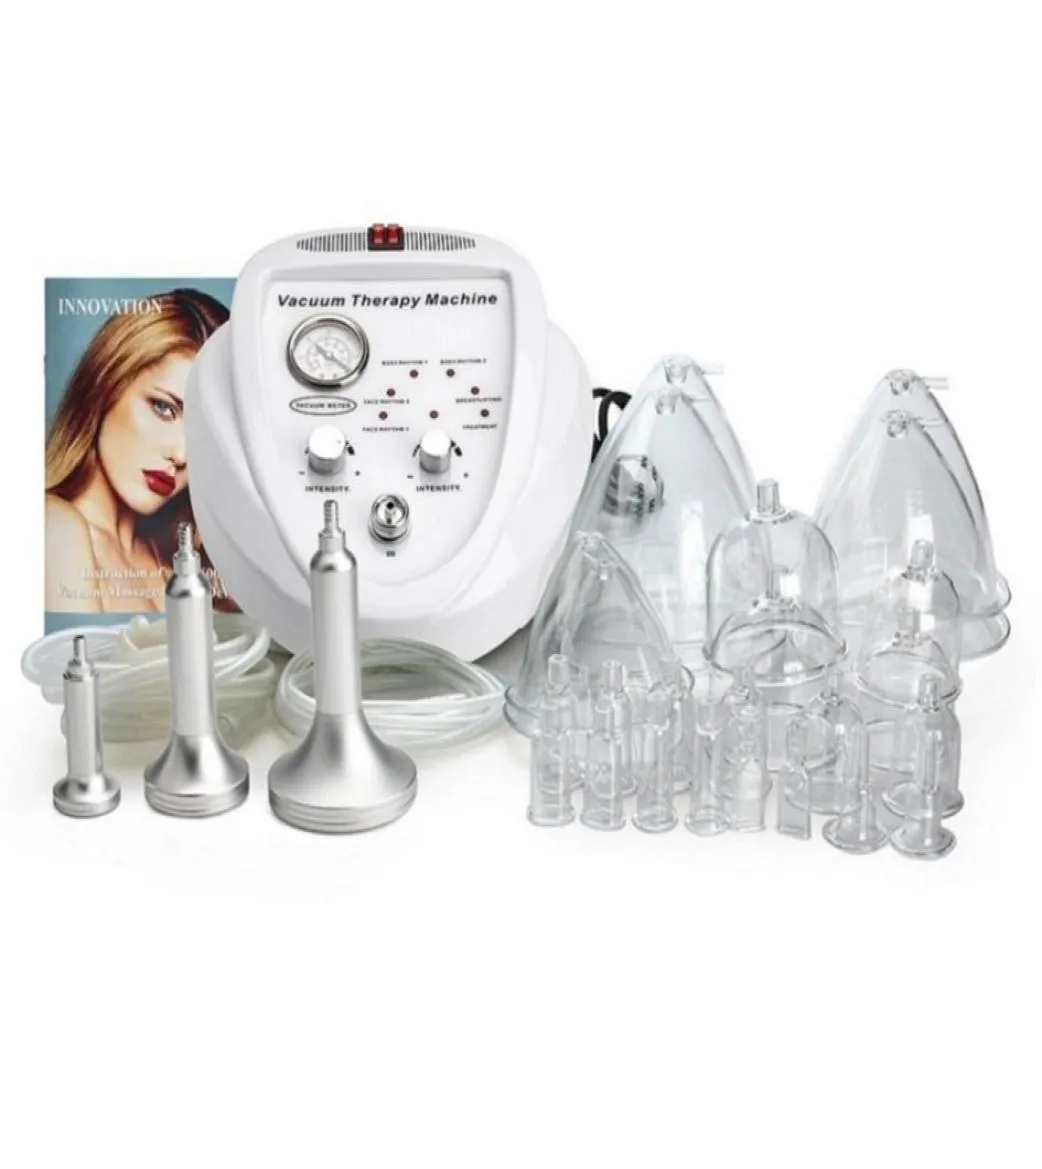 Poitrines de pompe de sein Enrassementemen Portable Slim Equipment Face and Body Therapy Massage Vacuum Cupping Machine5541362